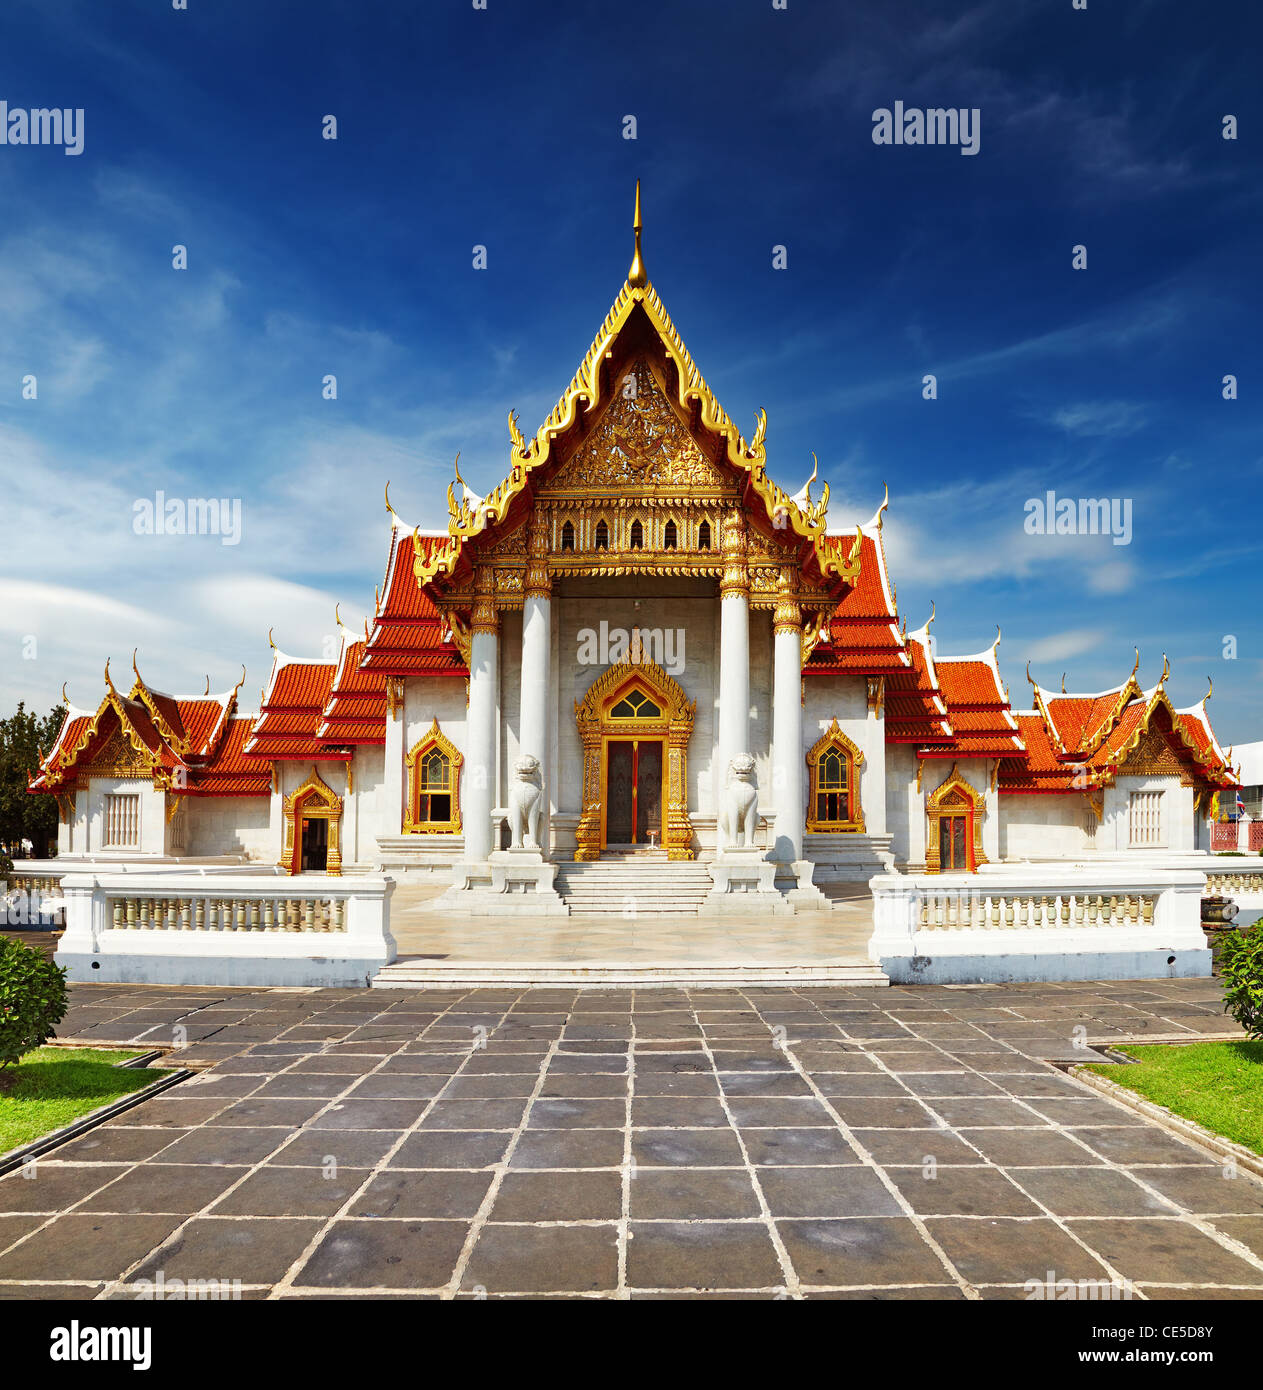 La arquitectura tradicional de Tailandia, Wat Benjamaborphit o Templo de mármol, Bangkok Foto de stock